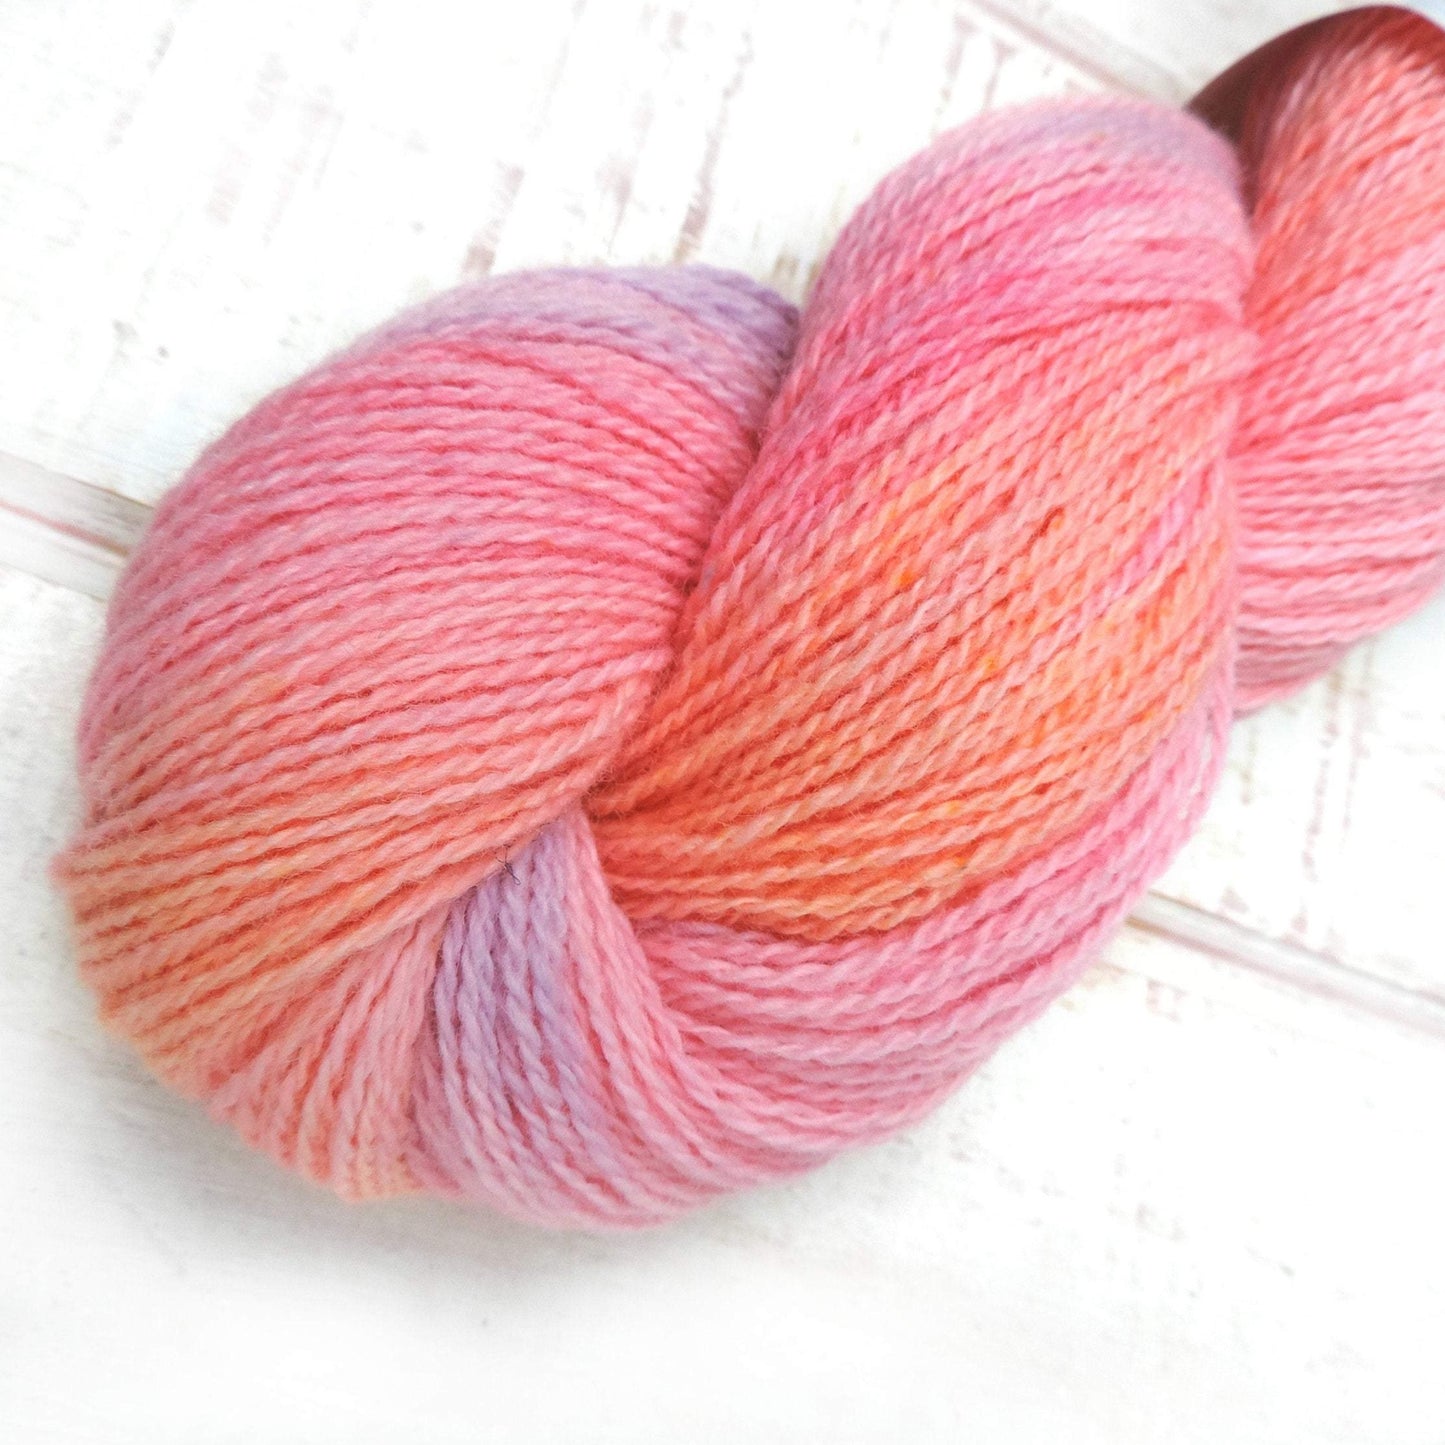 Flower Power - Trollfjord Sock - Hand Dyed Yarn - Variegated Yarn